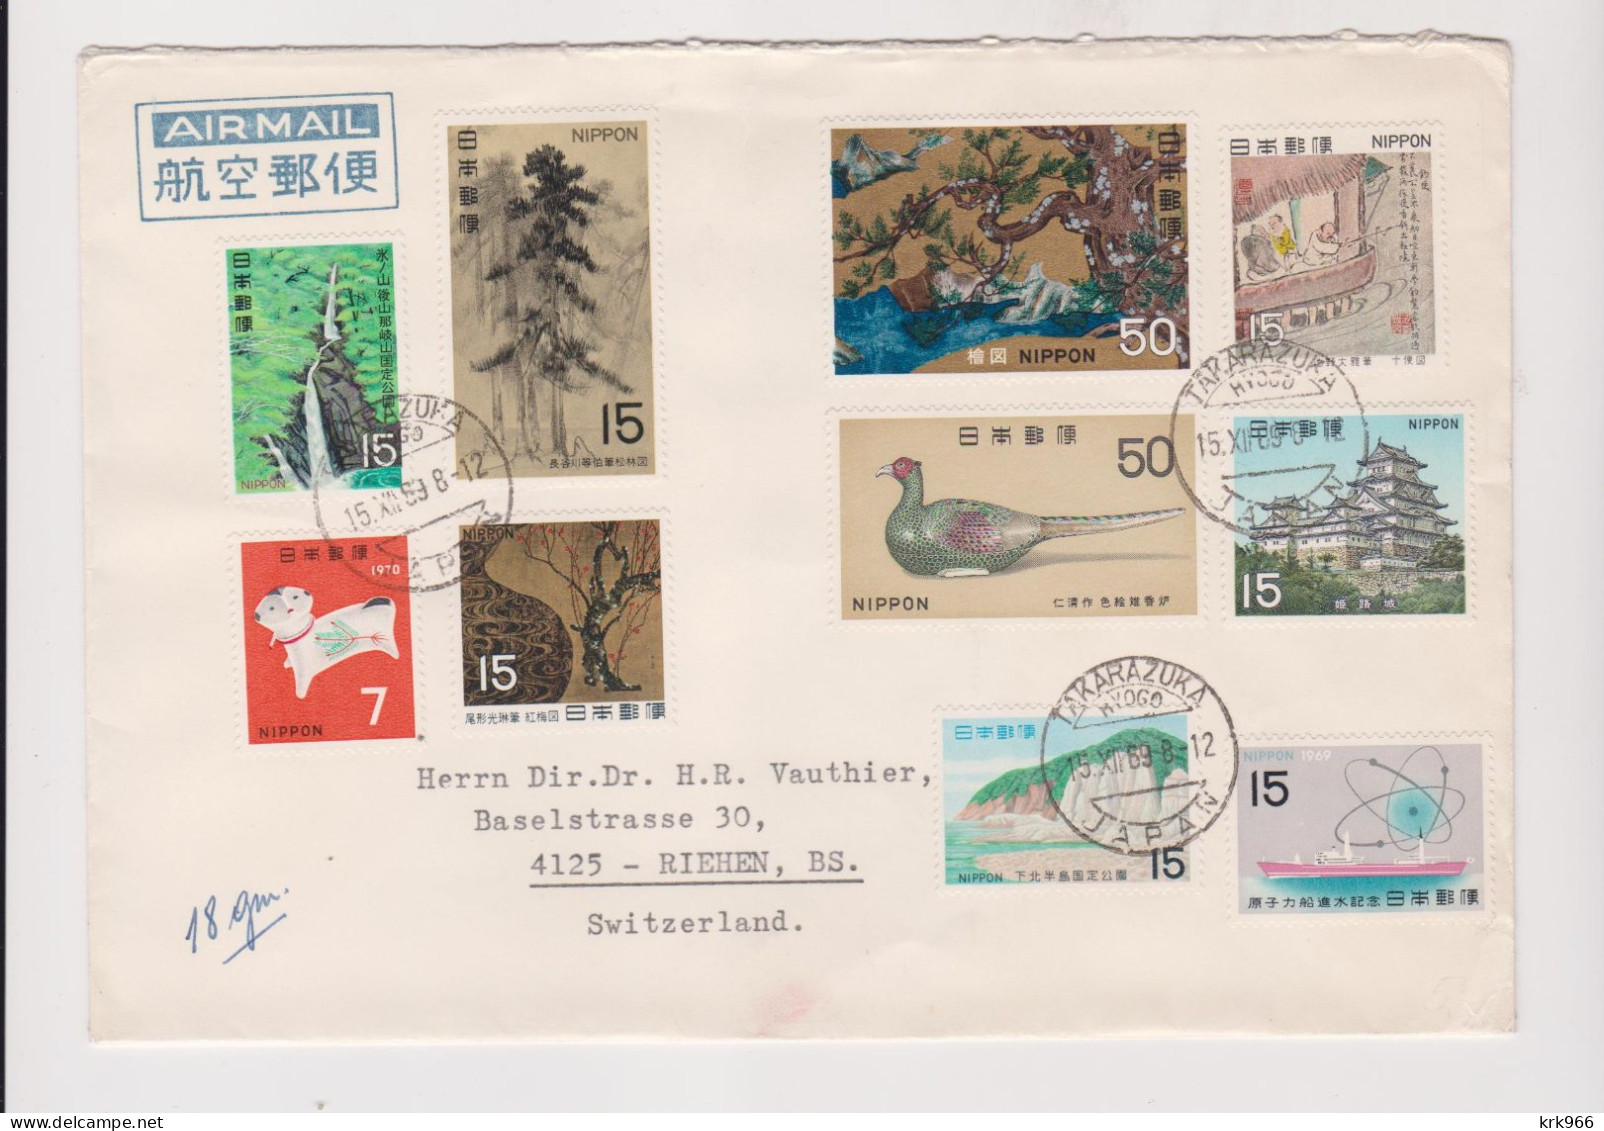 JAPAN 1969 TAKARAZUKA Nice Airmail Cover To Swityerland - Briefe U. Dokumente